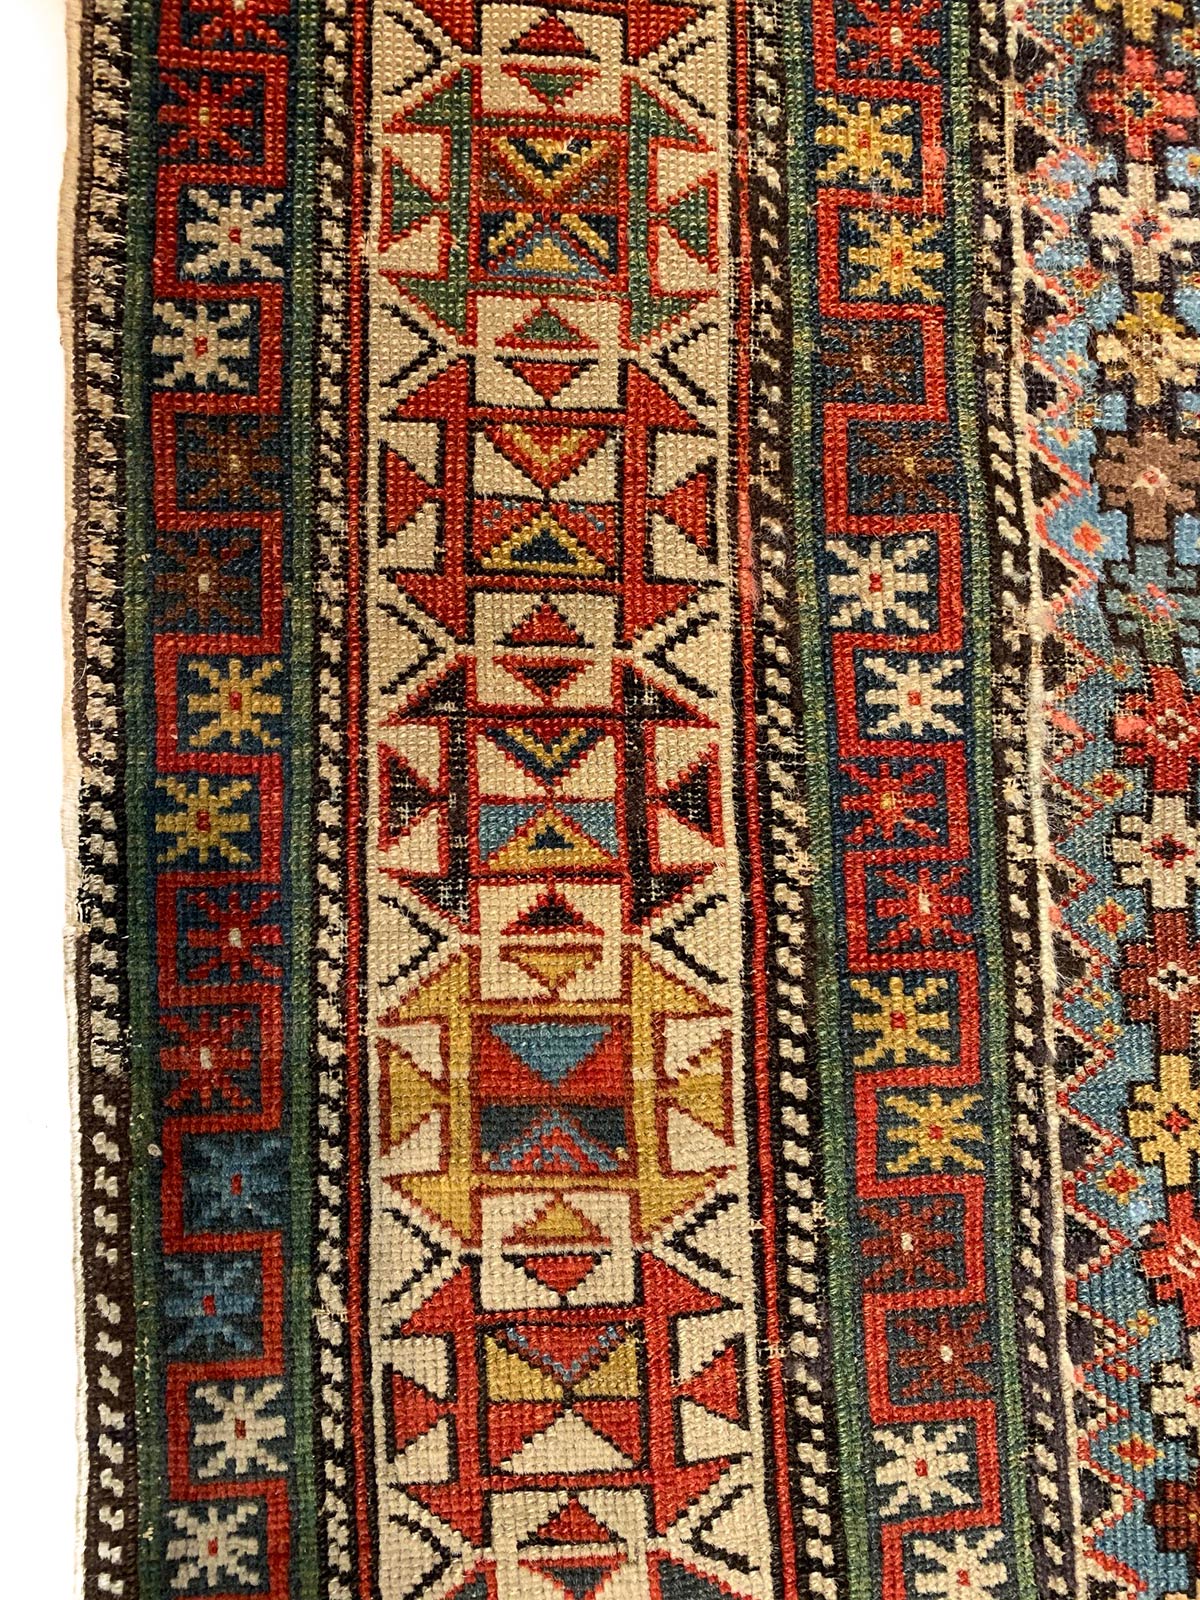 Prayer Rug Shirwan Marasali, Central Caucasus, Late 1800s, cm. 160x115, warp, weave and fleece - Image 4 of 5